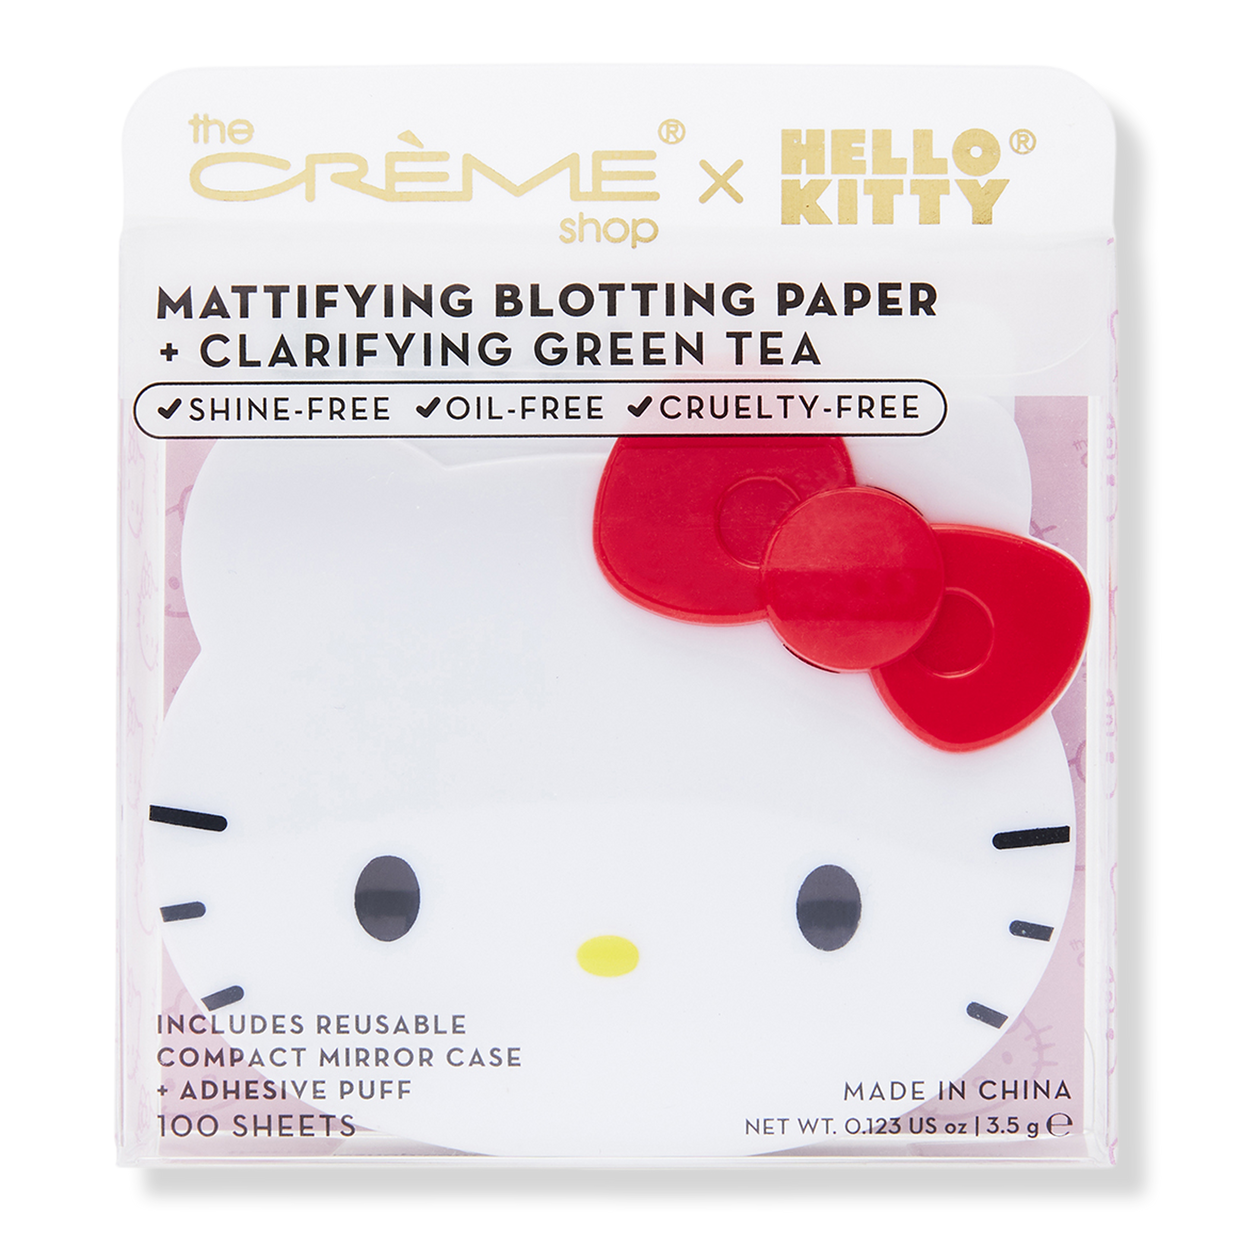 Hello Kitty Sticker Book [24 Sheets]